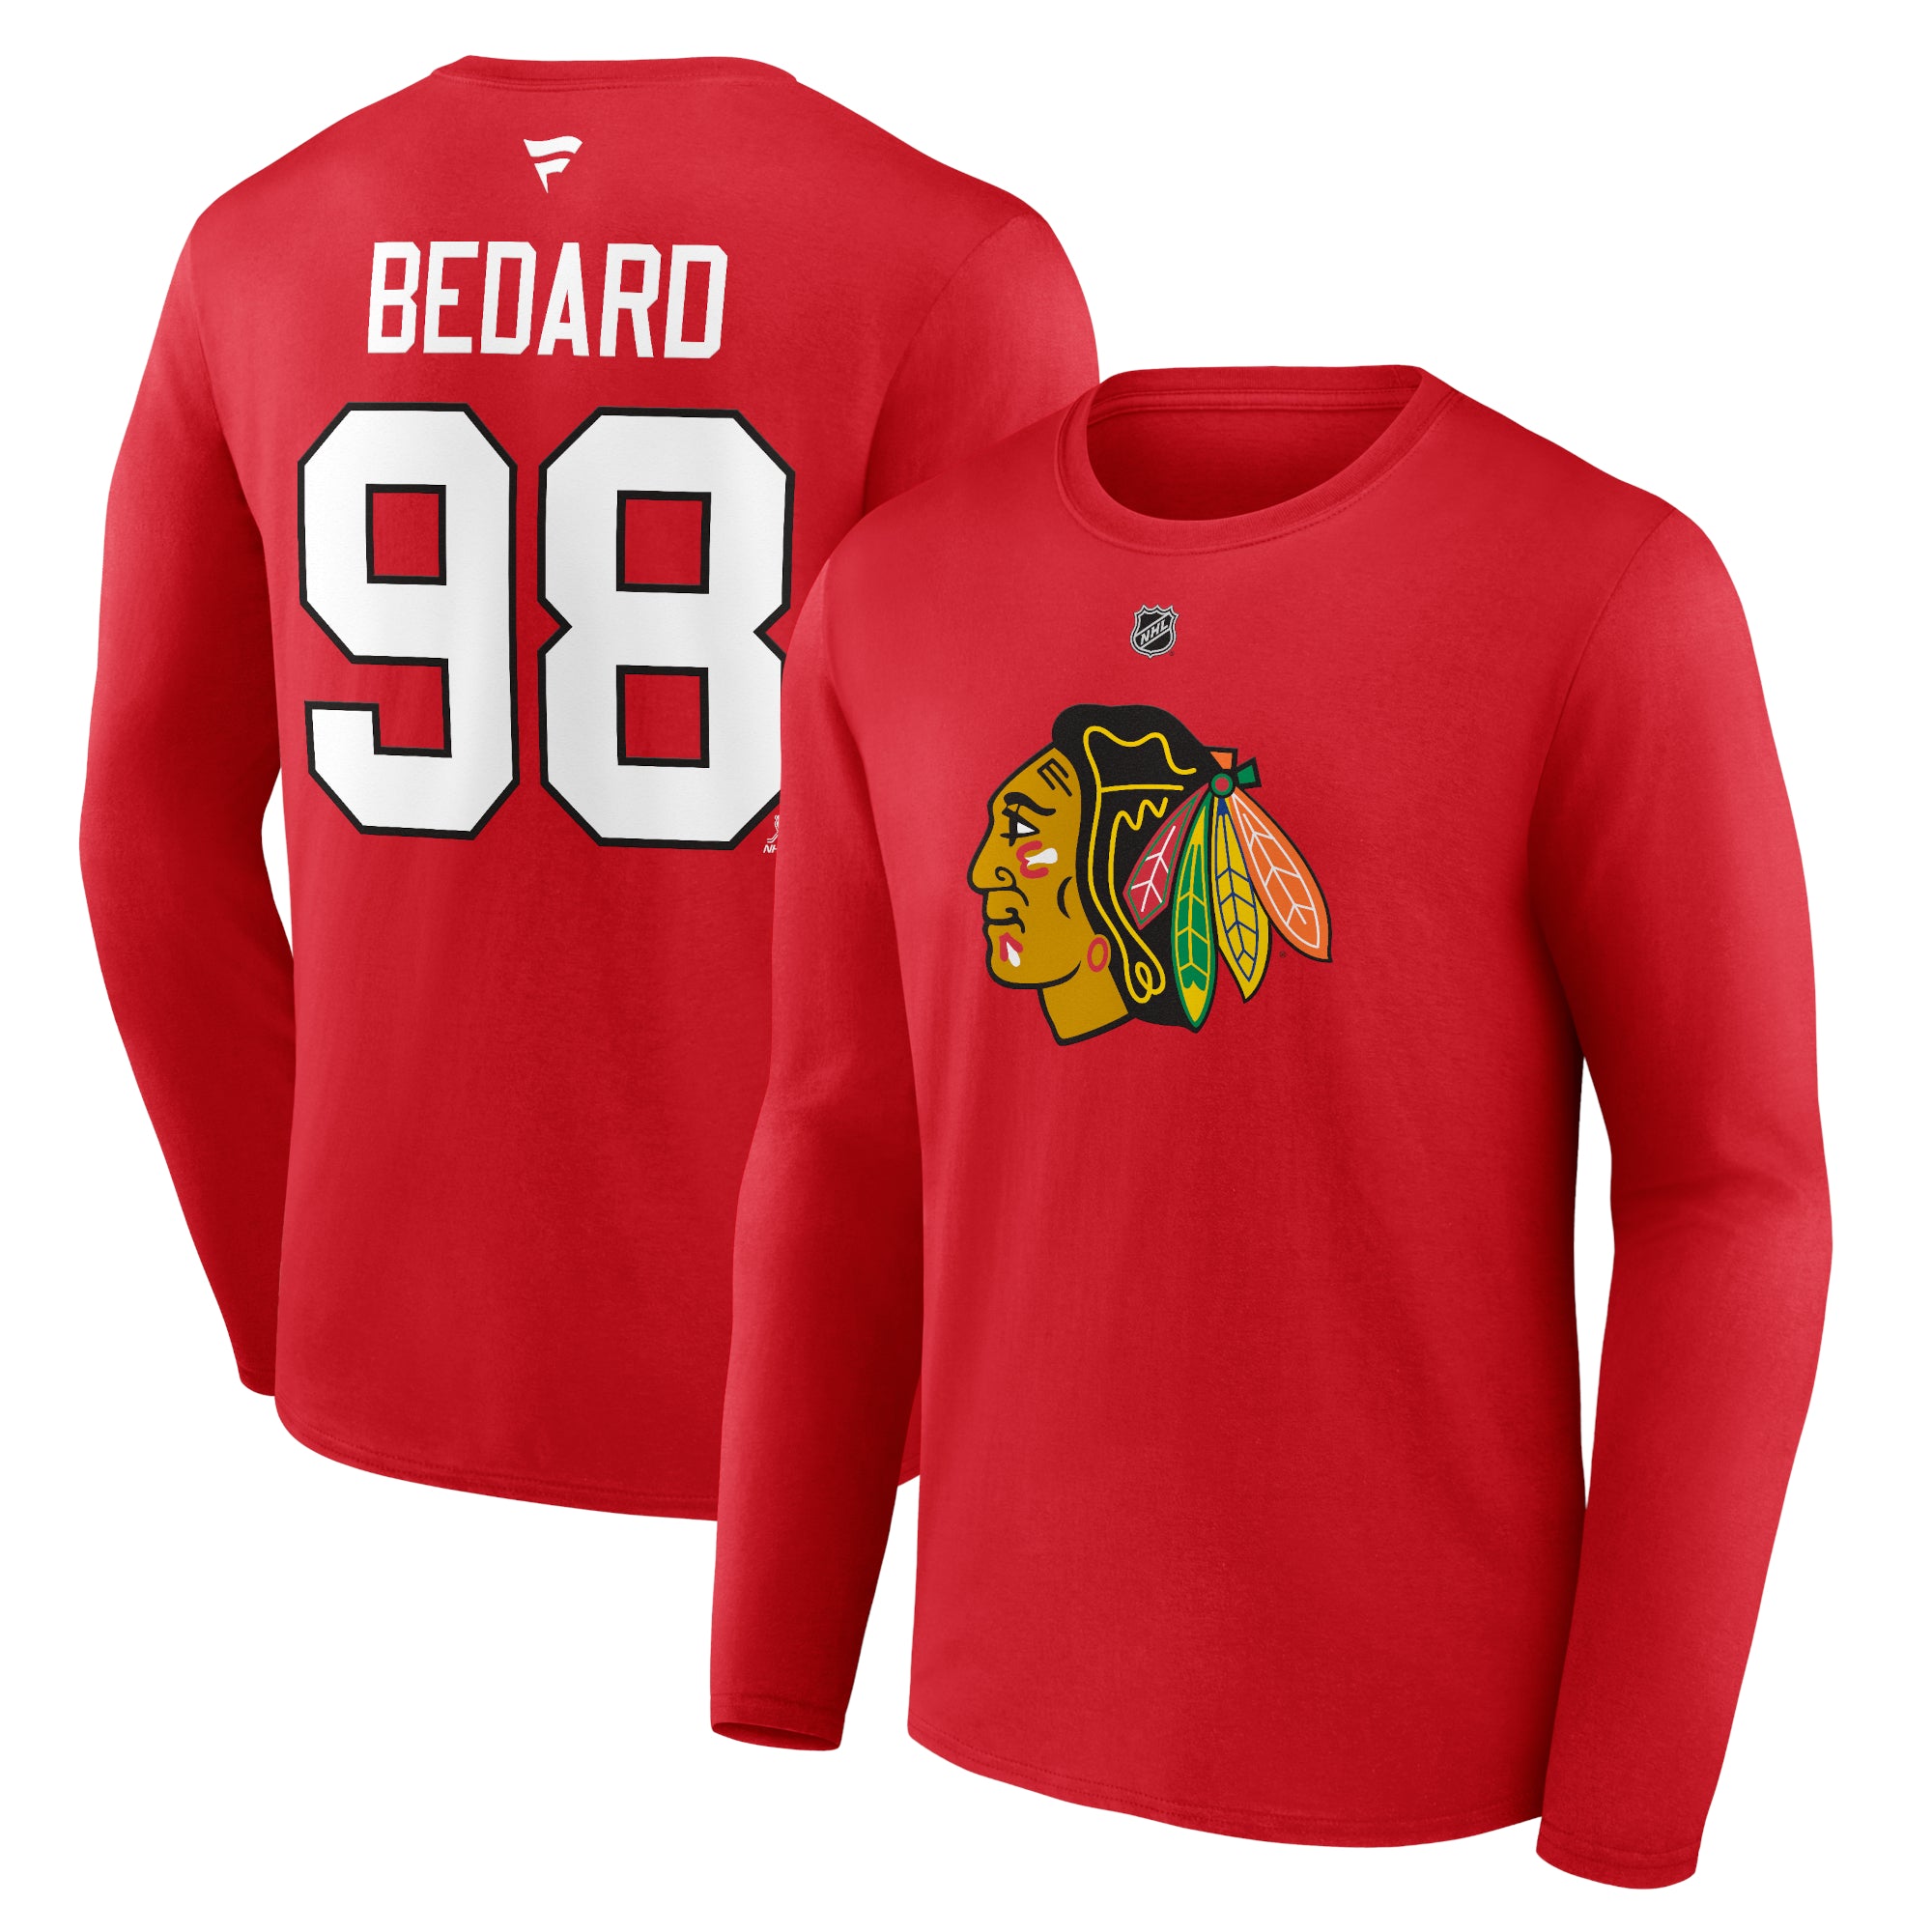 Personalized Chicago Blackhawks Red Baseball Jersey - T-shirts Low